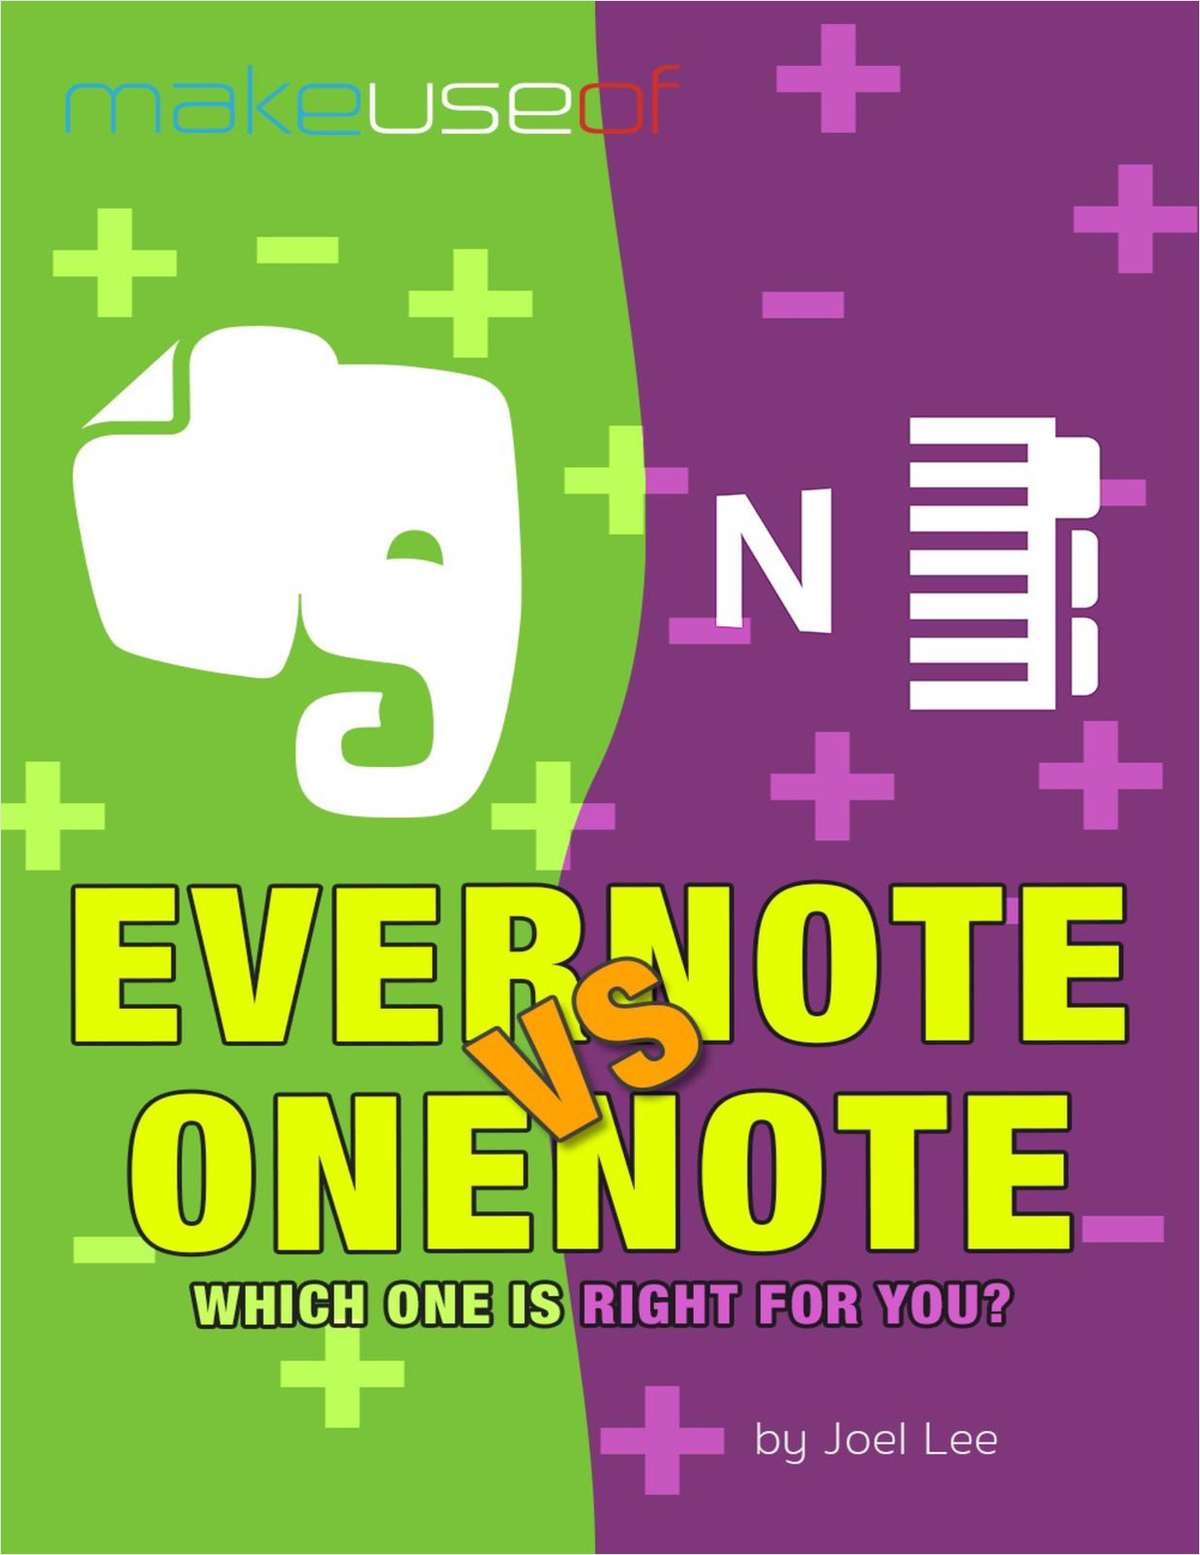 microsoft onenote vs evernote 2014